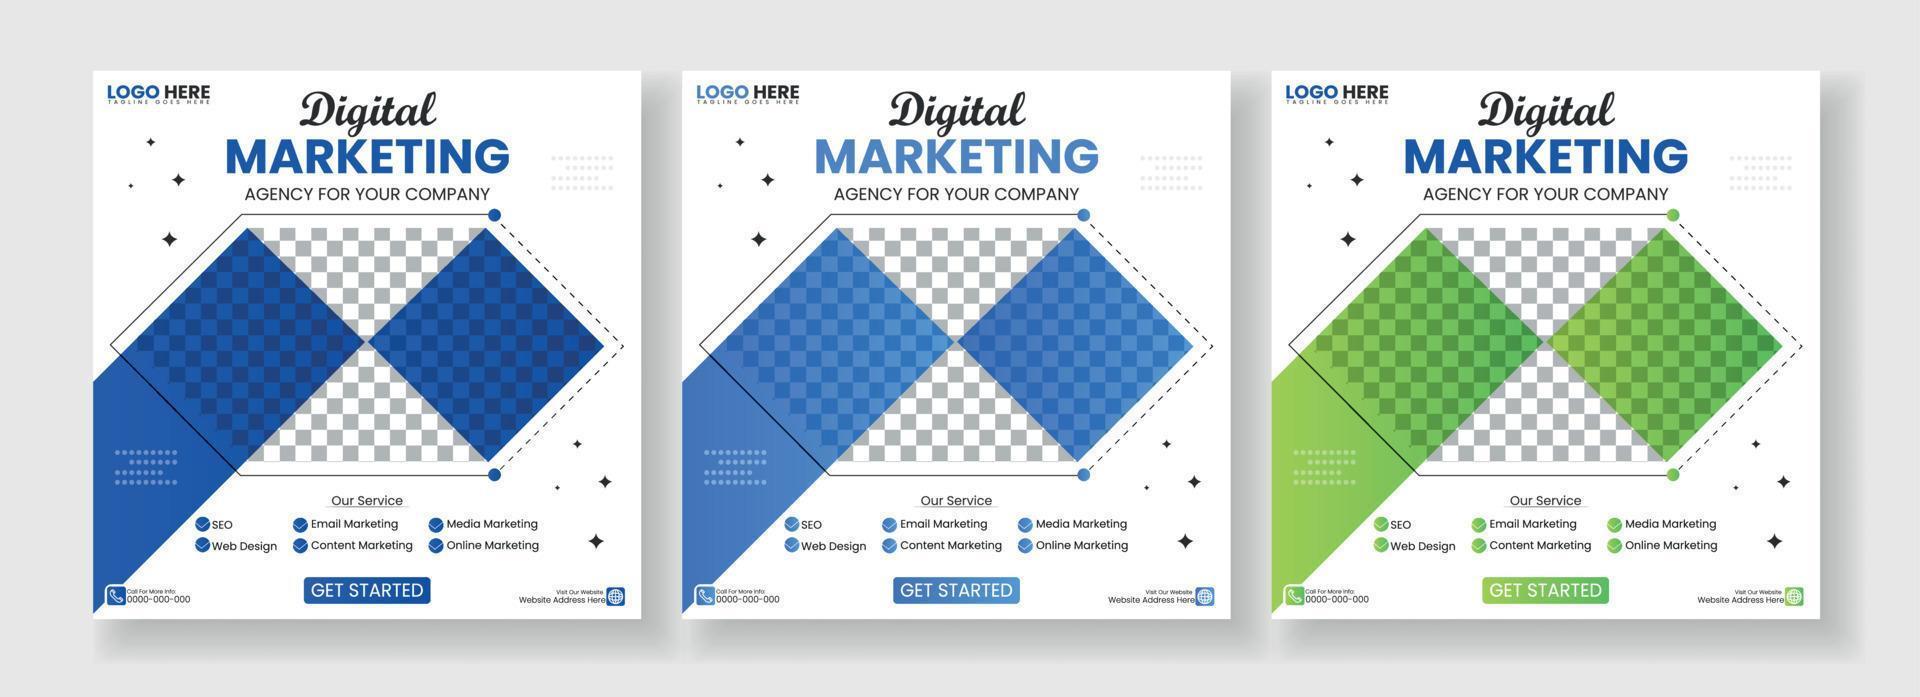 Digital marketing Agency banner for social media post template vector